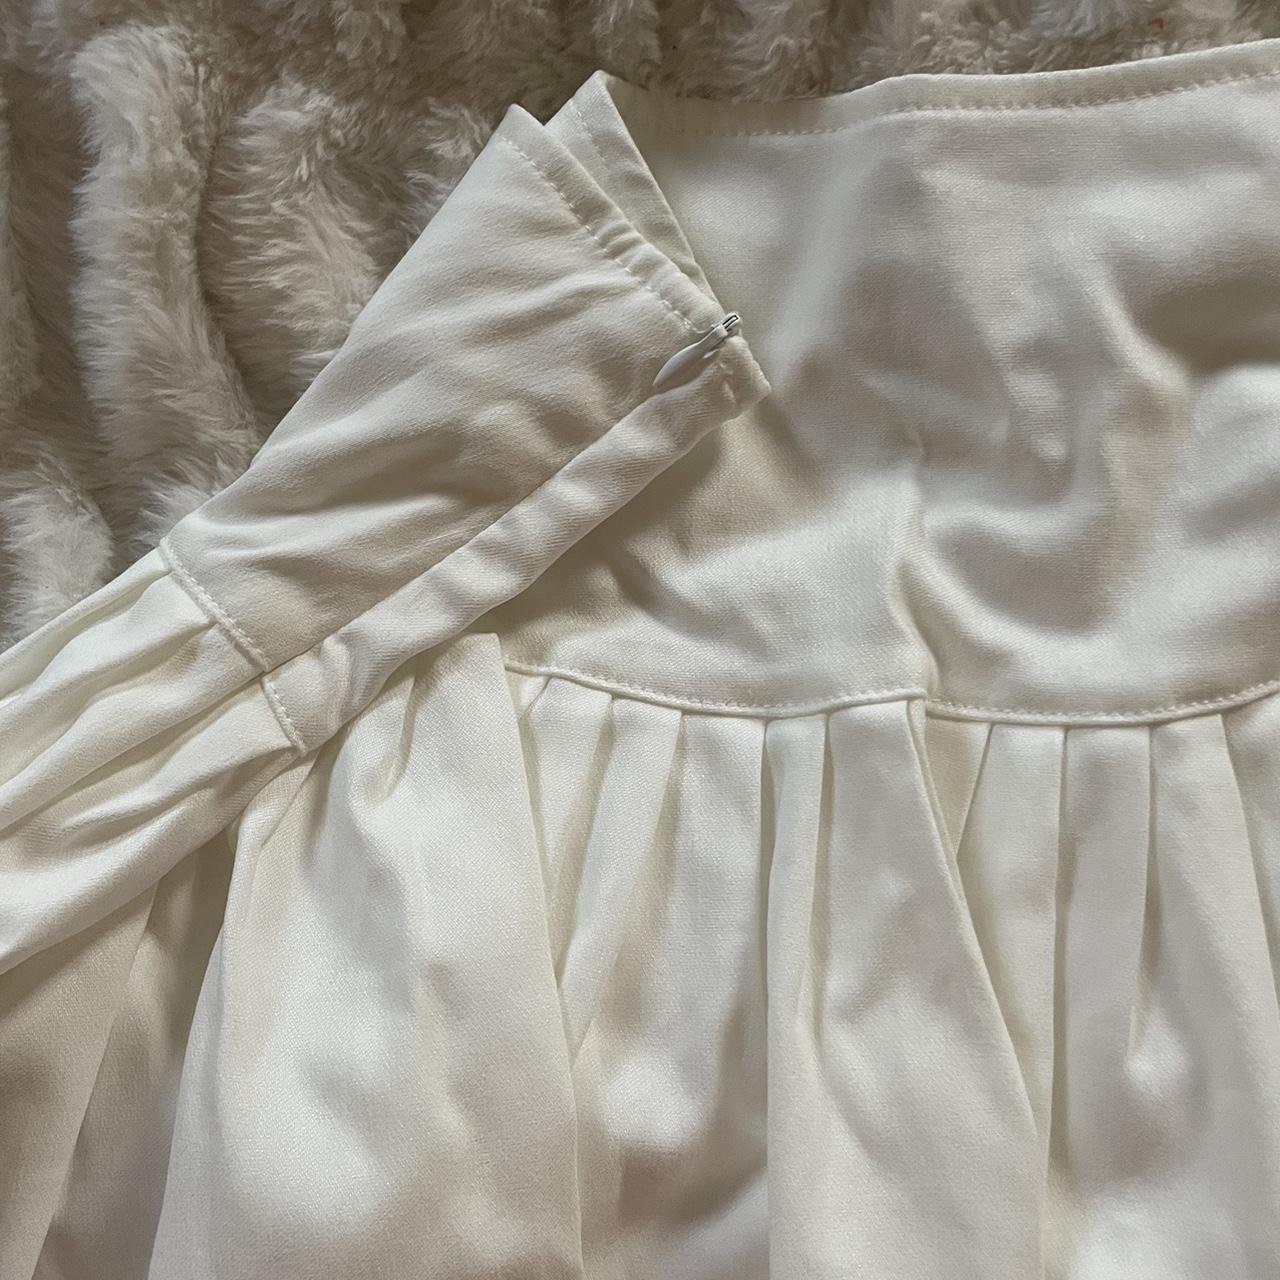 SHEIN Women's White Skirt (2)